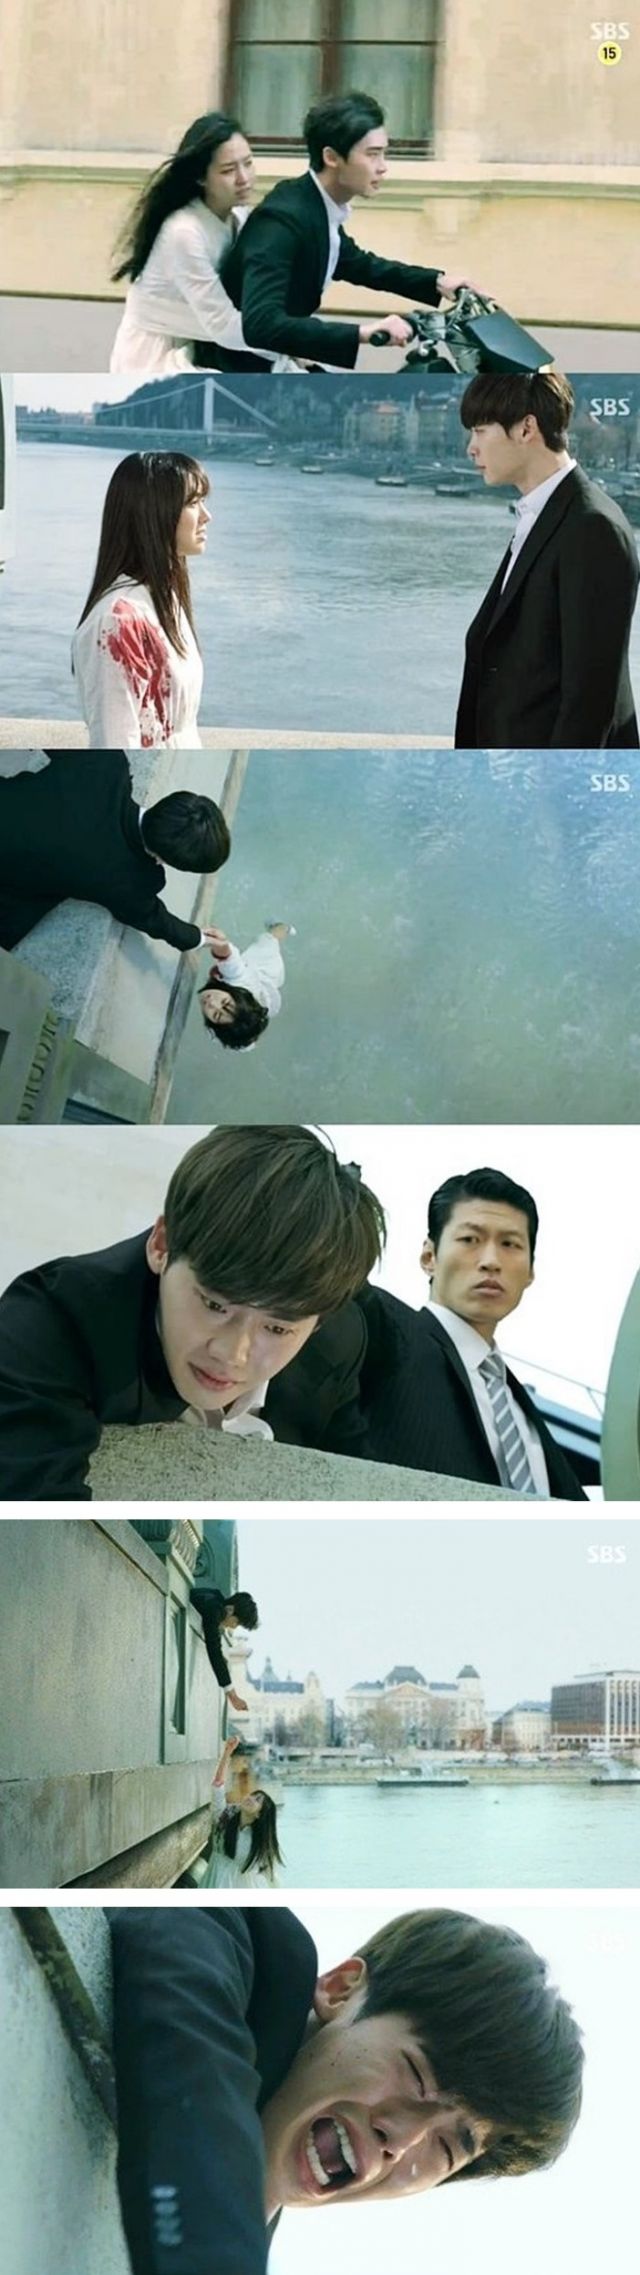 episode 2 captures for the Korean drama 'Doctor Stranger'